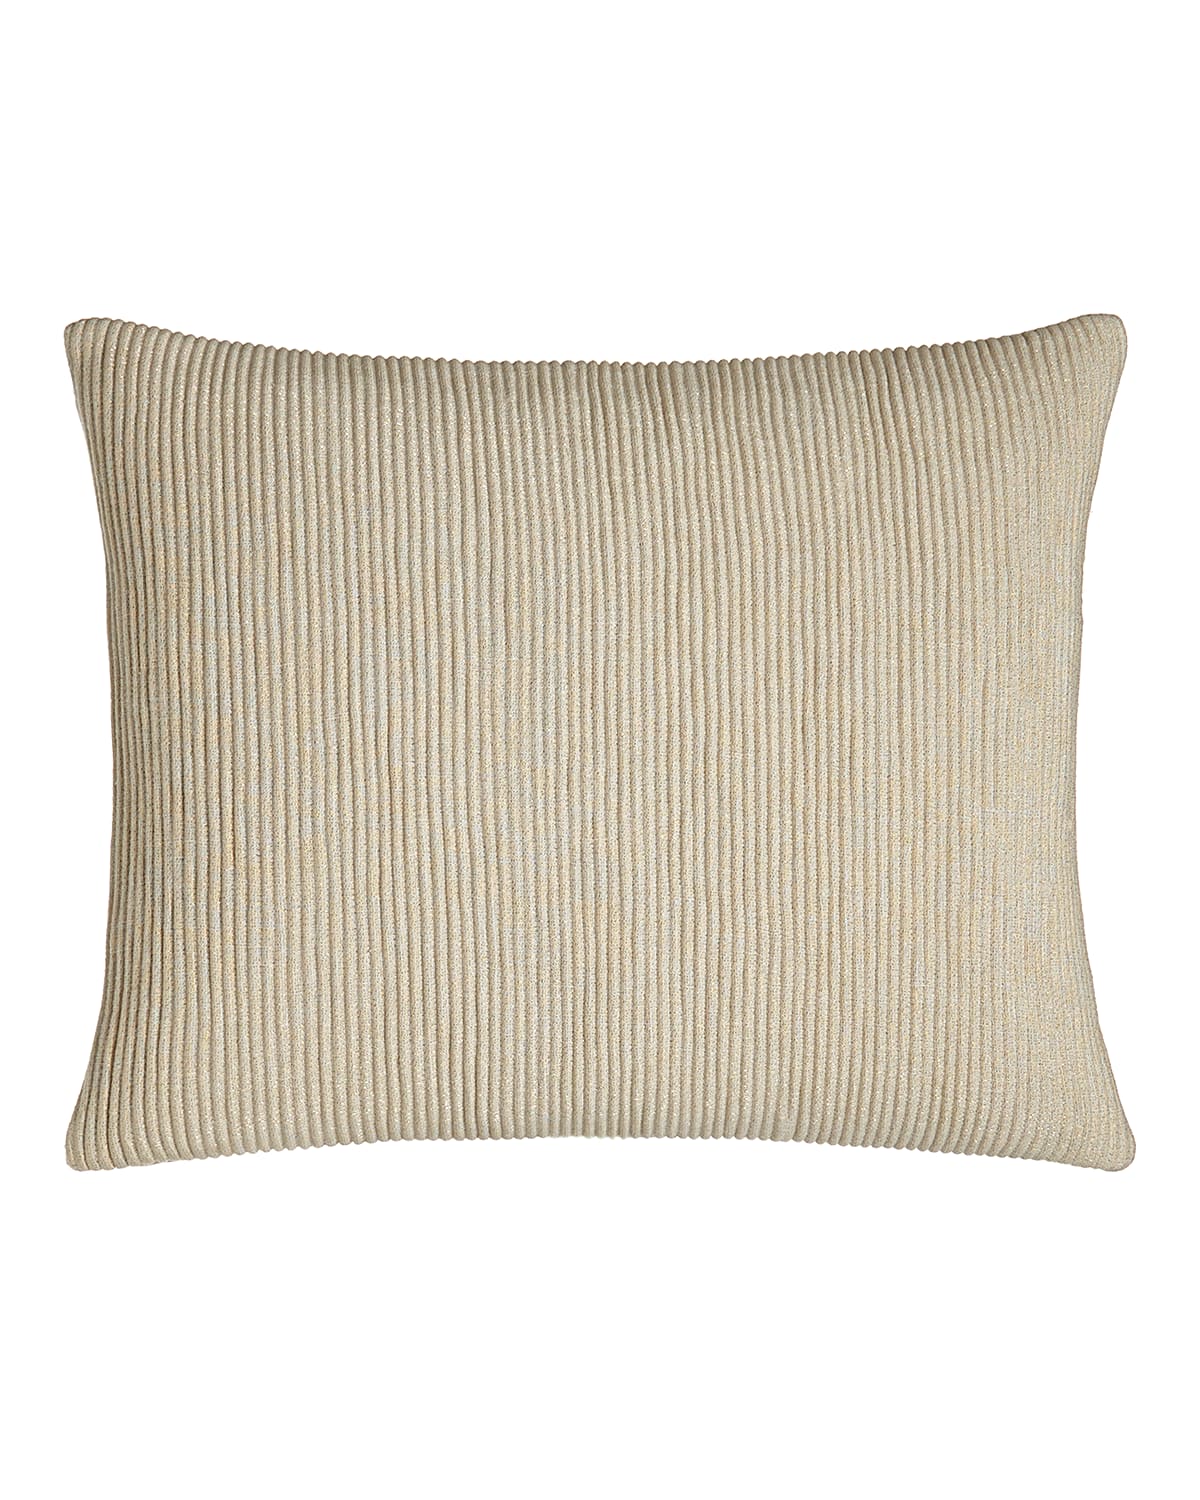 Image Donna Karan Home Moonscape Corded Pillow, 16" x 20"